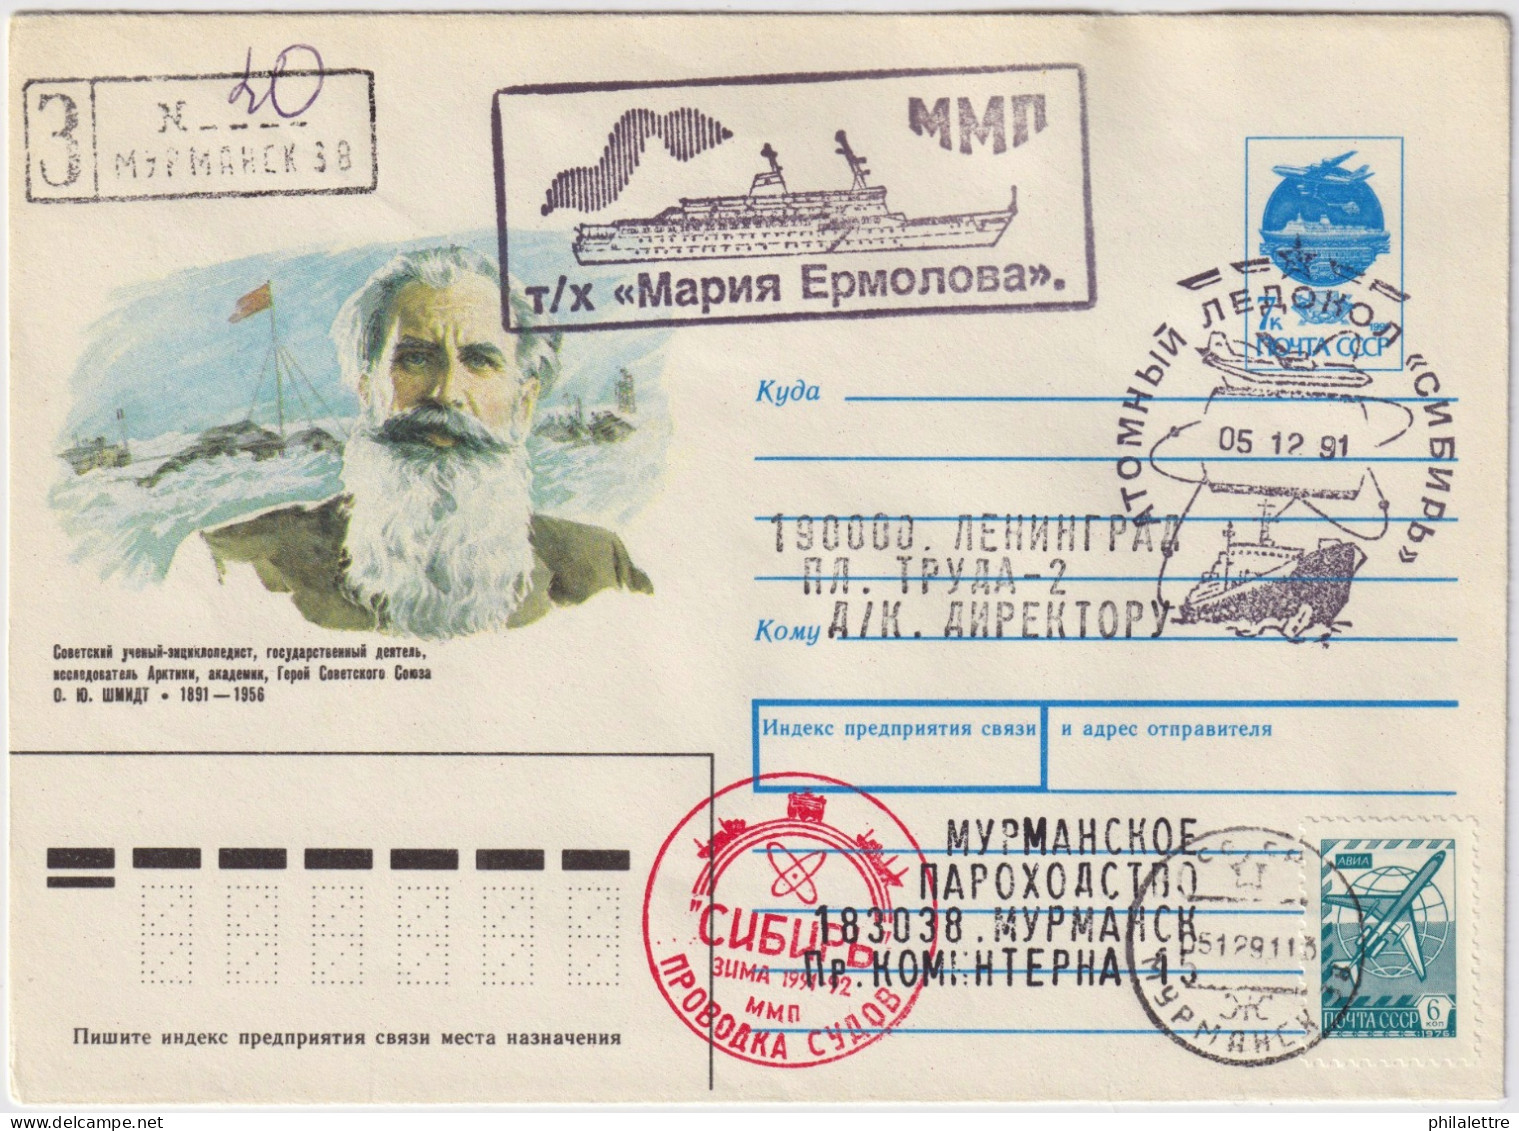 USSR / Russia - 1991 Polar Cover From Cruise Ship M/V "M. YERMOLOVA" Via Icebreaker "SIBERIA" & Murmansk To Leningrad - Covers & Documents